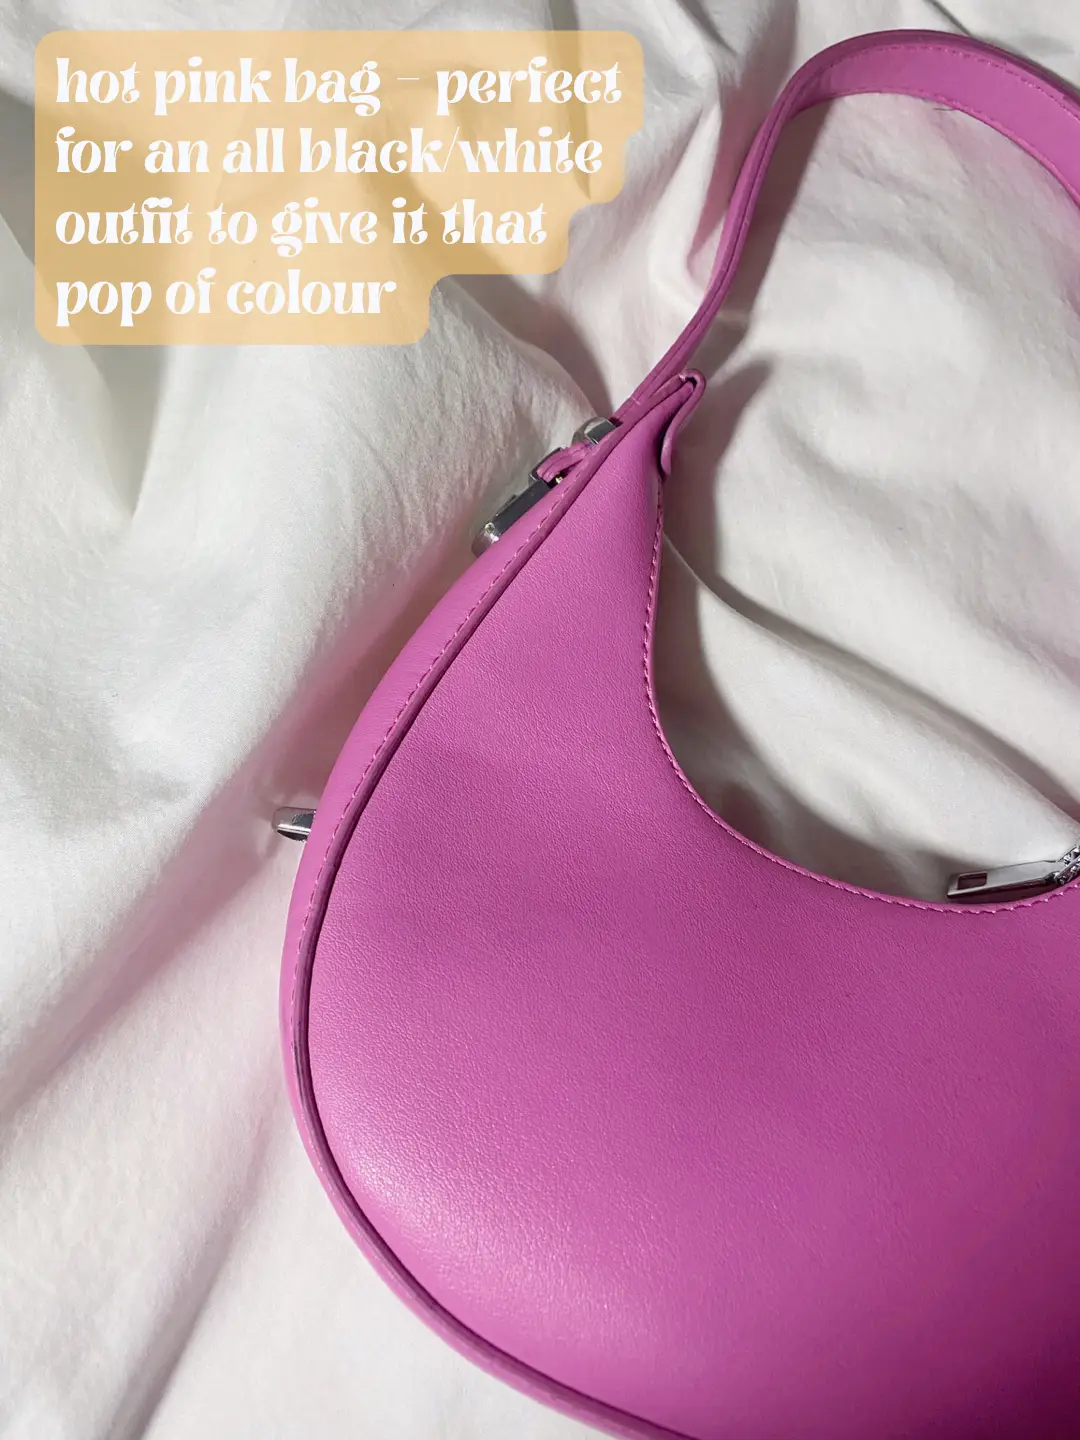 Jacquemus Gives Its Fan-Favorite Bag a Makeover - PurseBlog